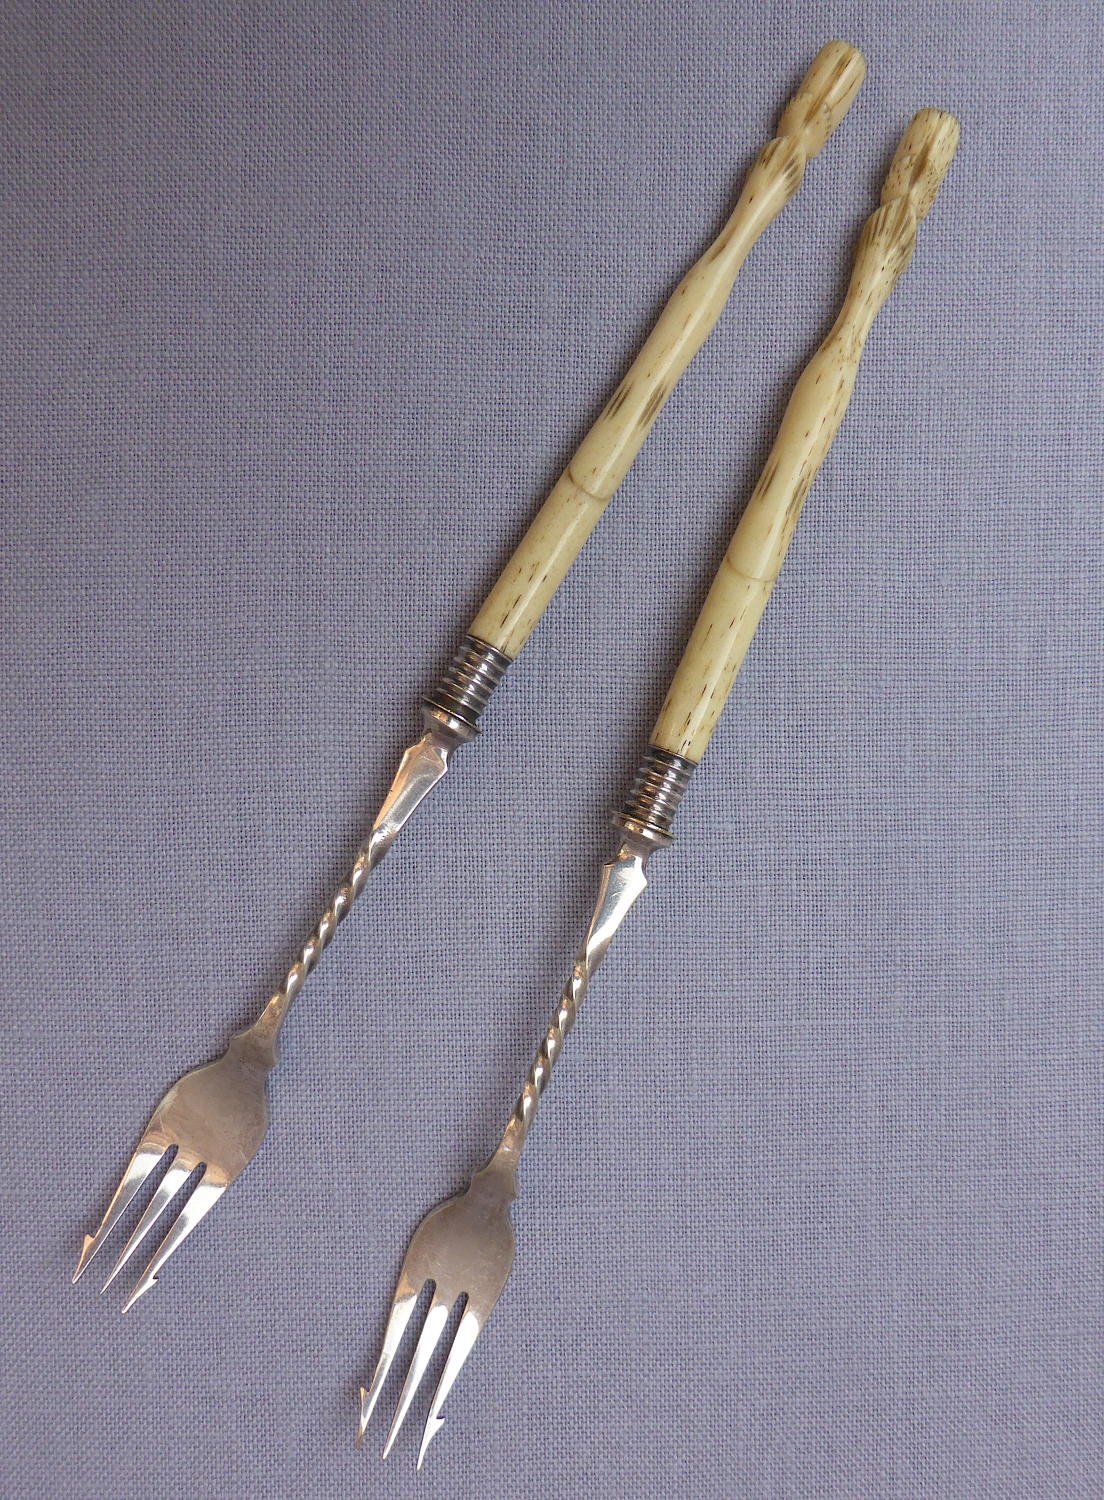 Pair of late 19th century hoof handle pickle forks